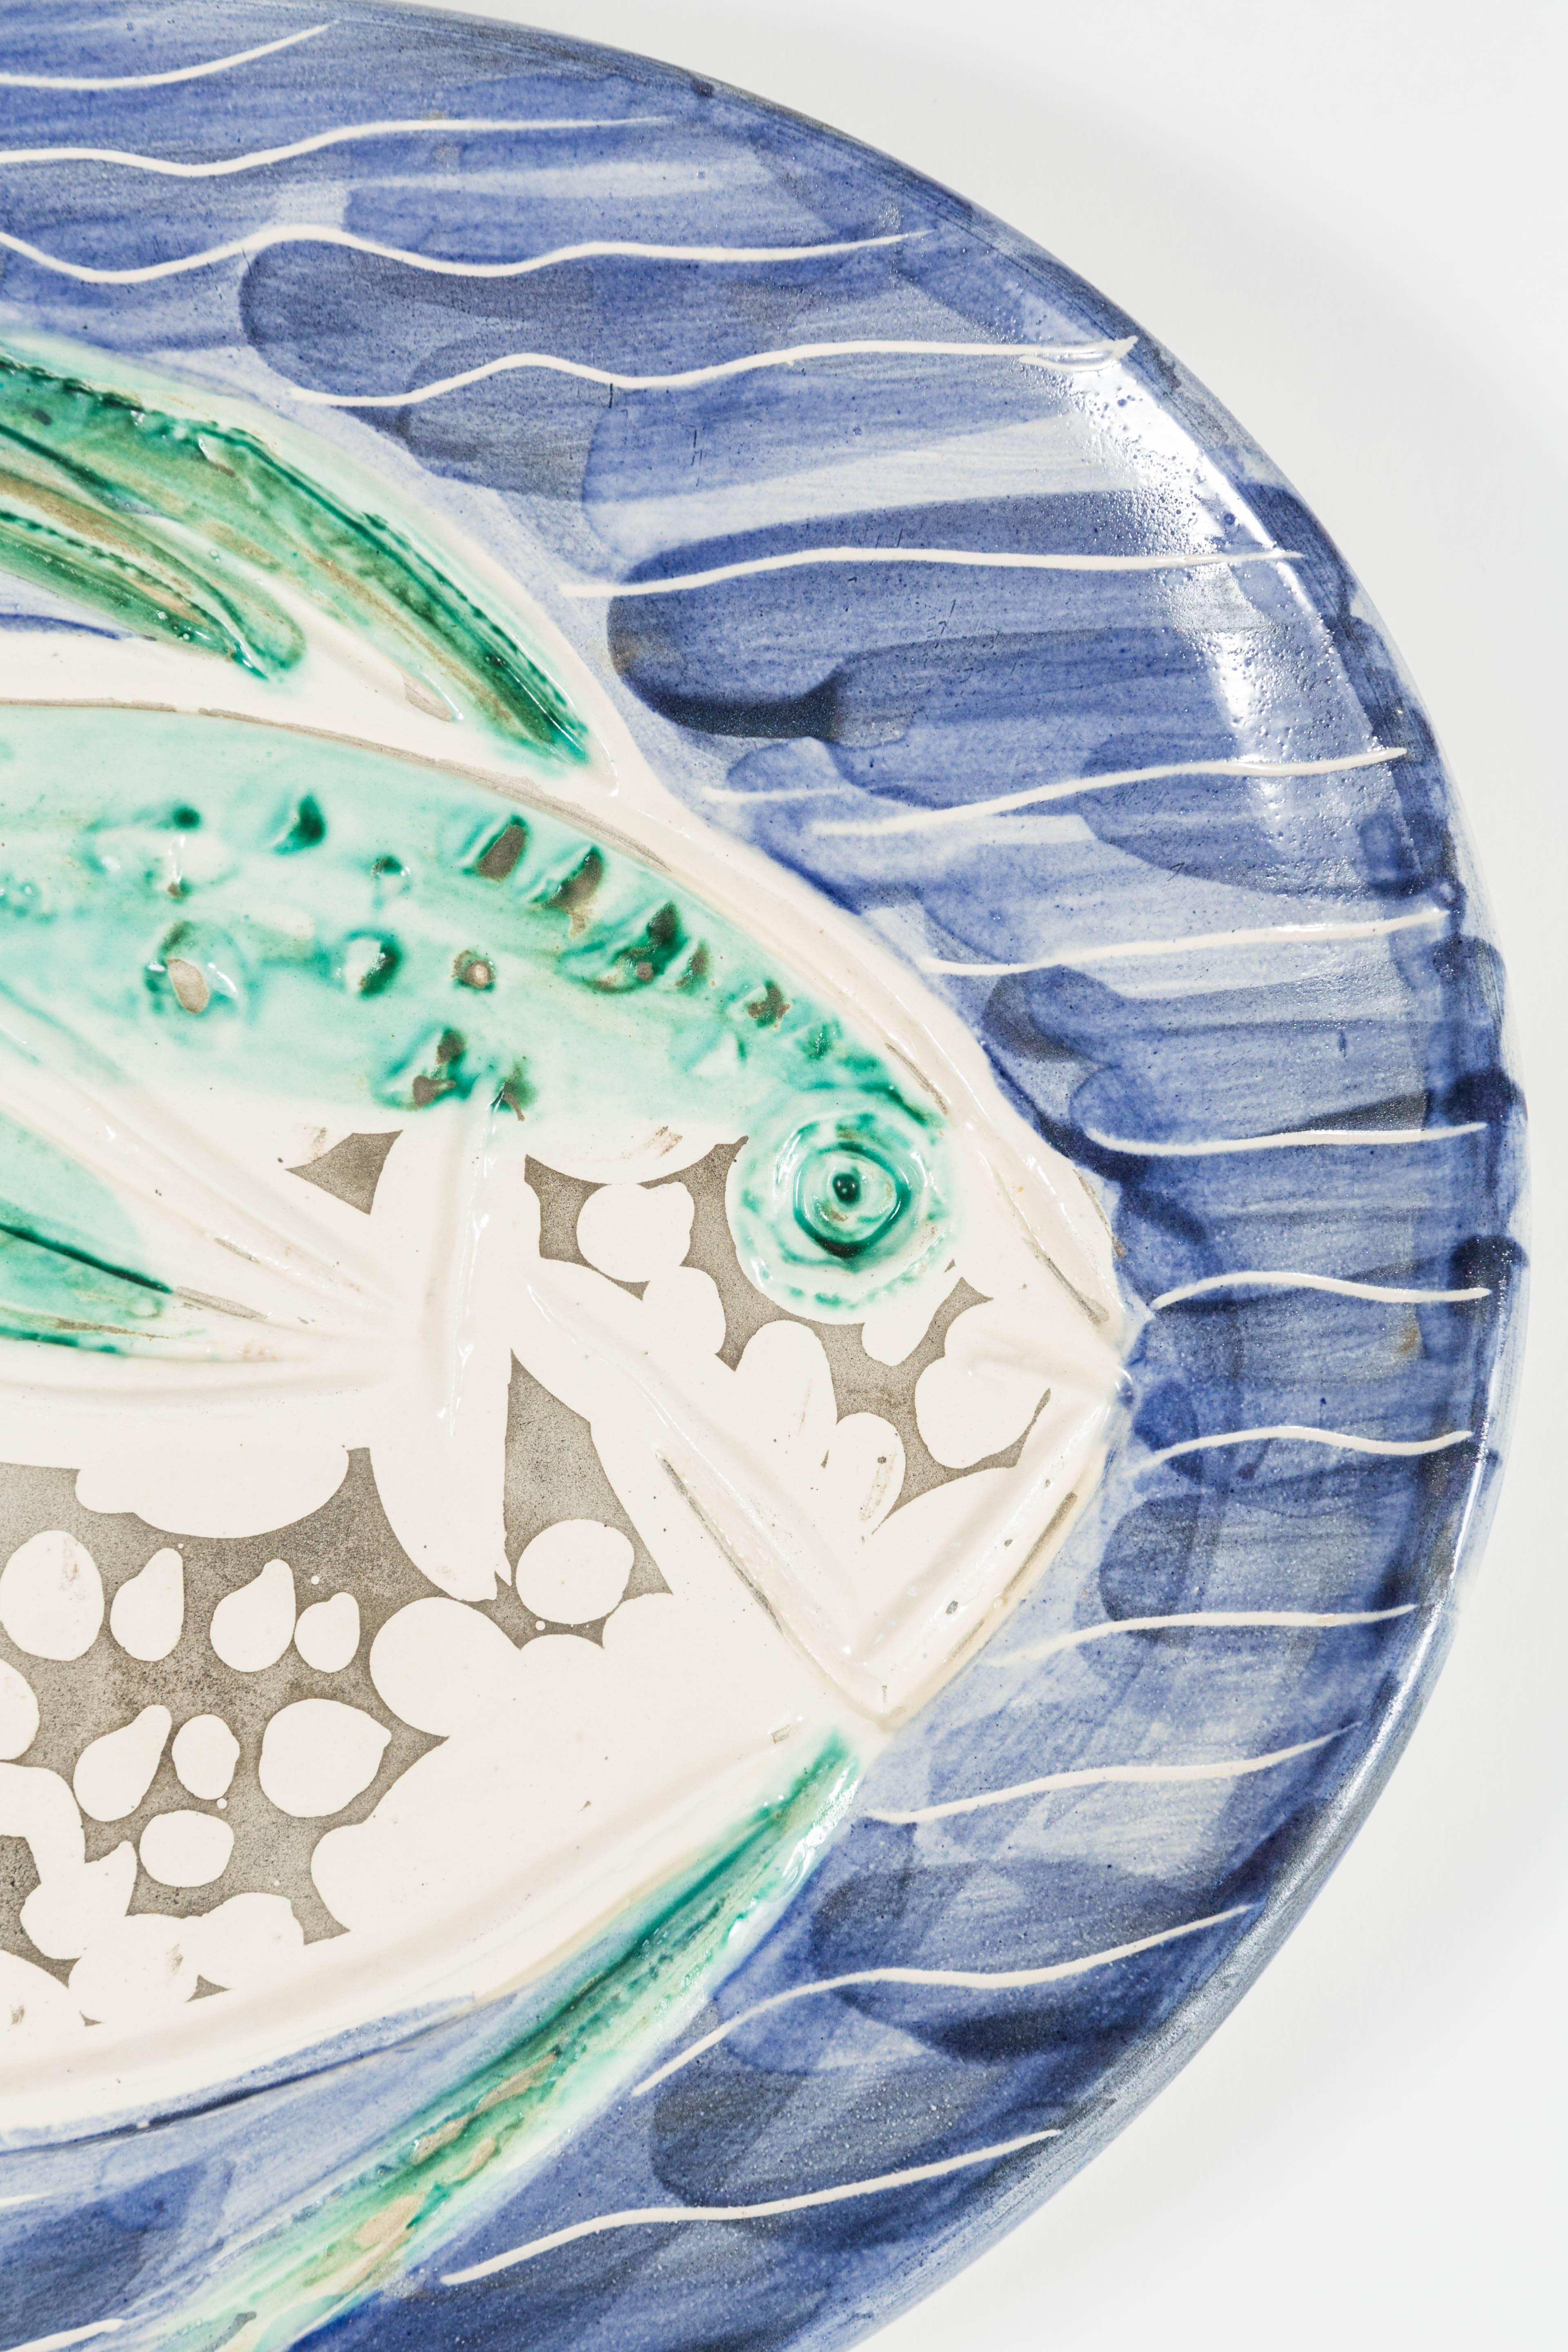 Glazed Striking 'Poisson Bleu' Madoura Ceramic Plate by Pablo Picasso